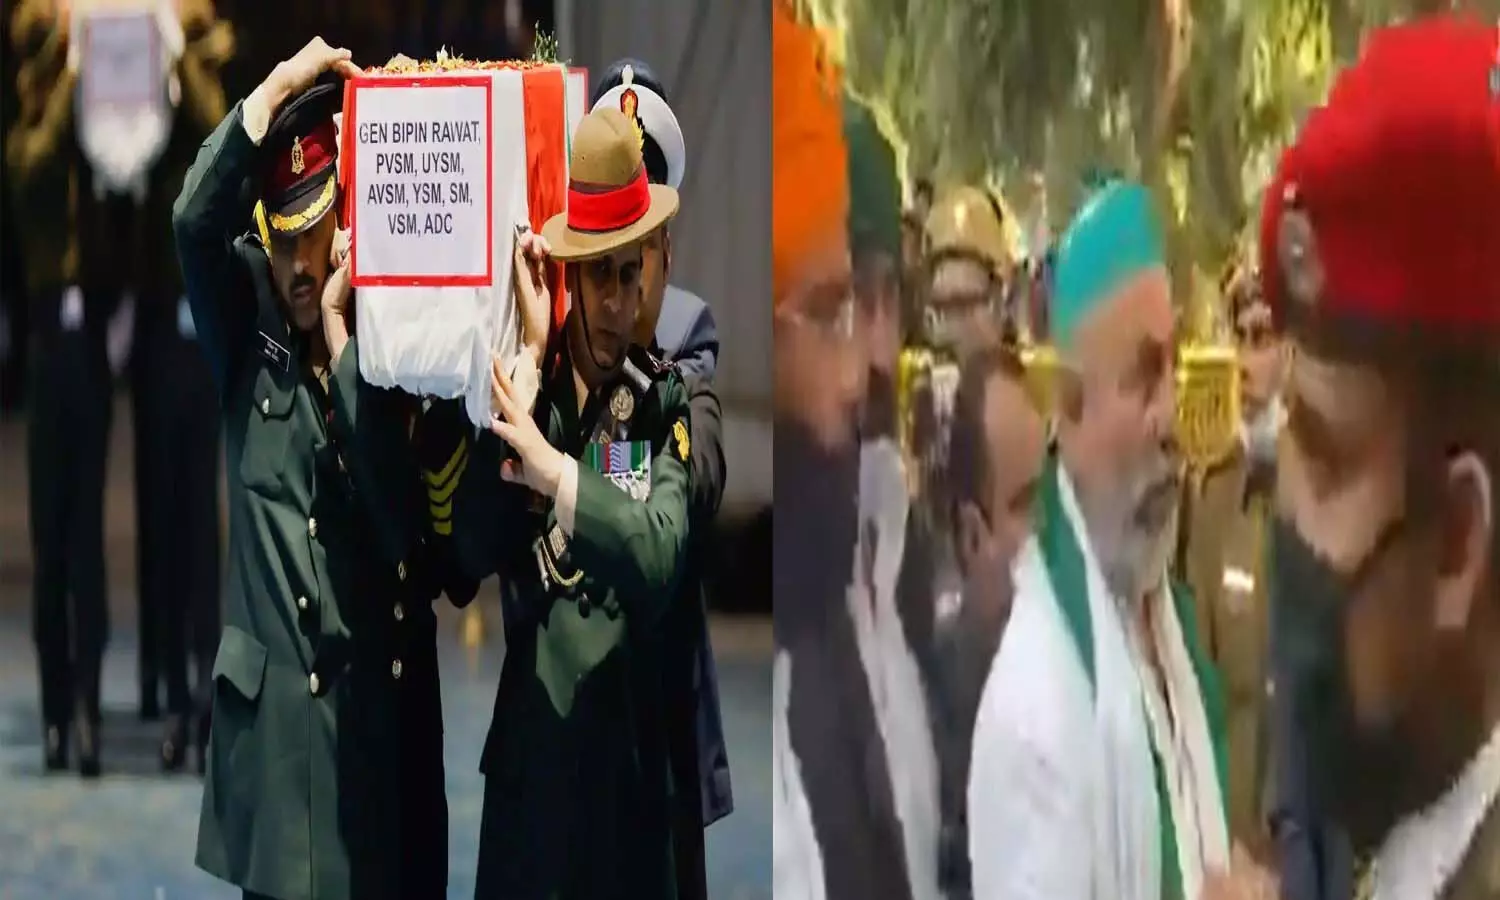 Slogans raised against Rakesh Ticket in the last journey of CDS Bipin Rawat